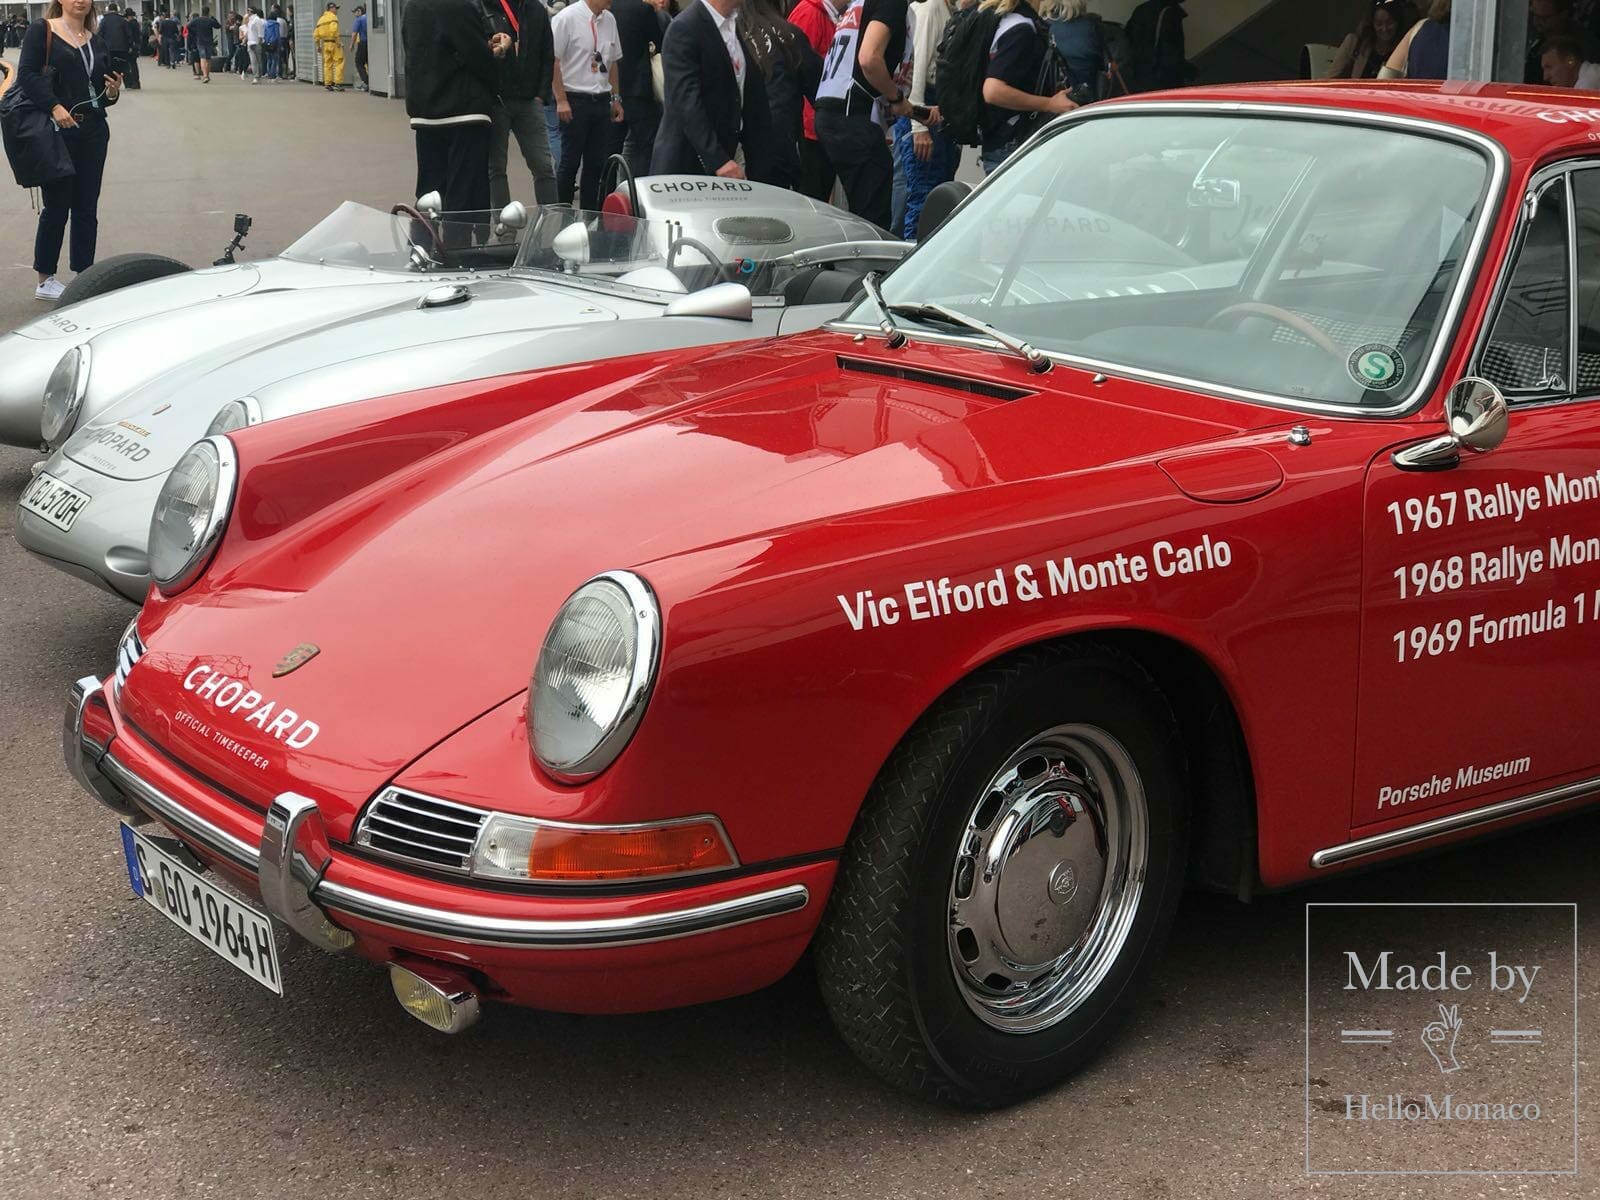 70th anniversary of Porsche parade participant